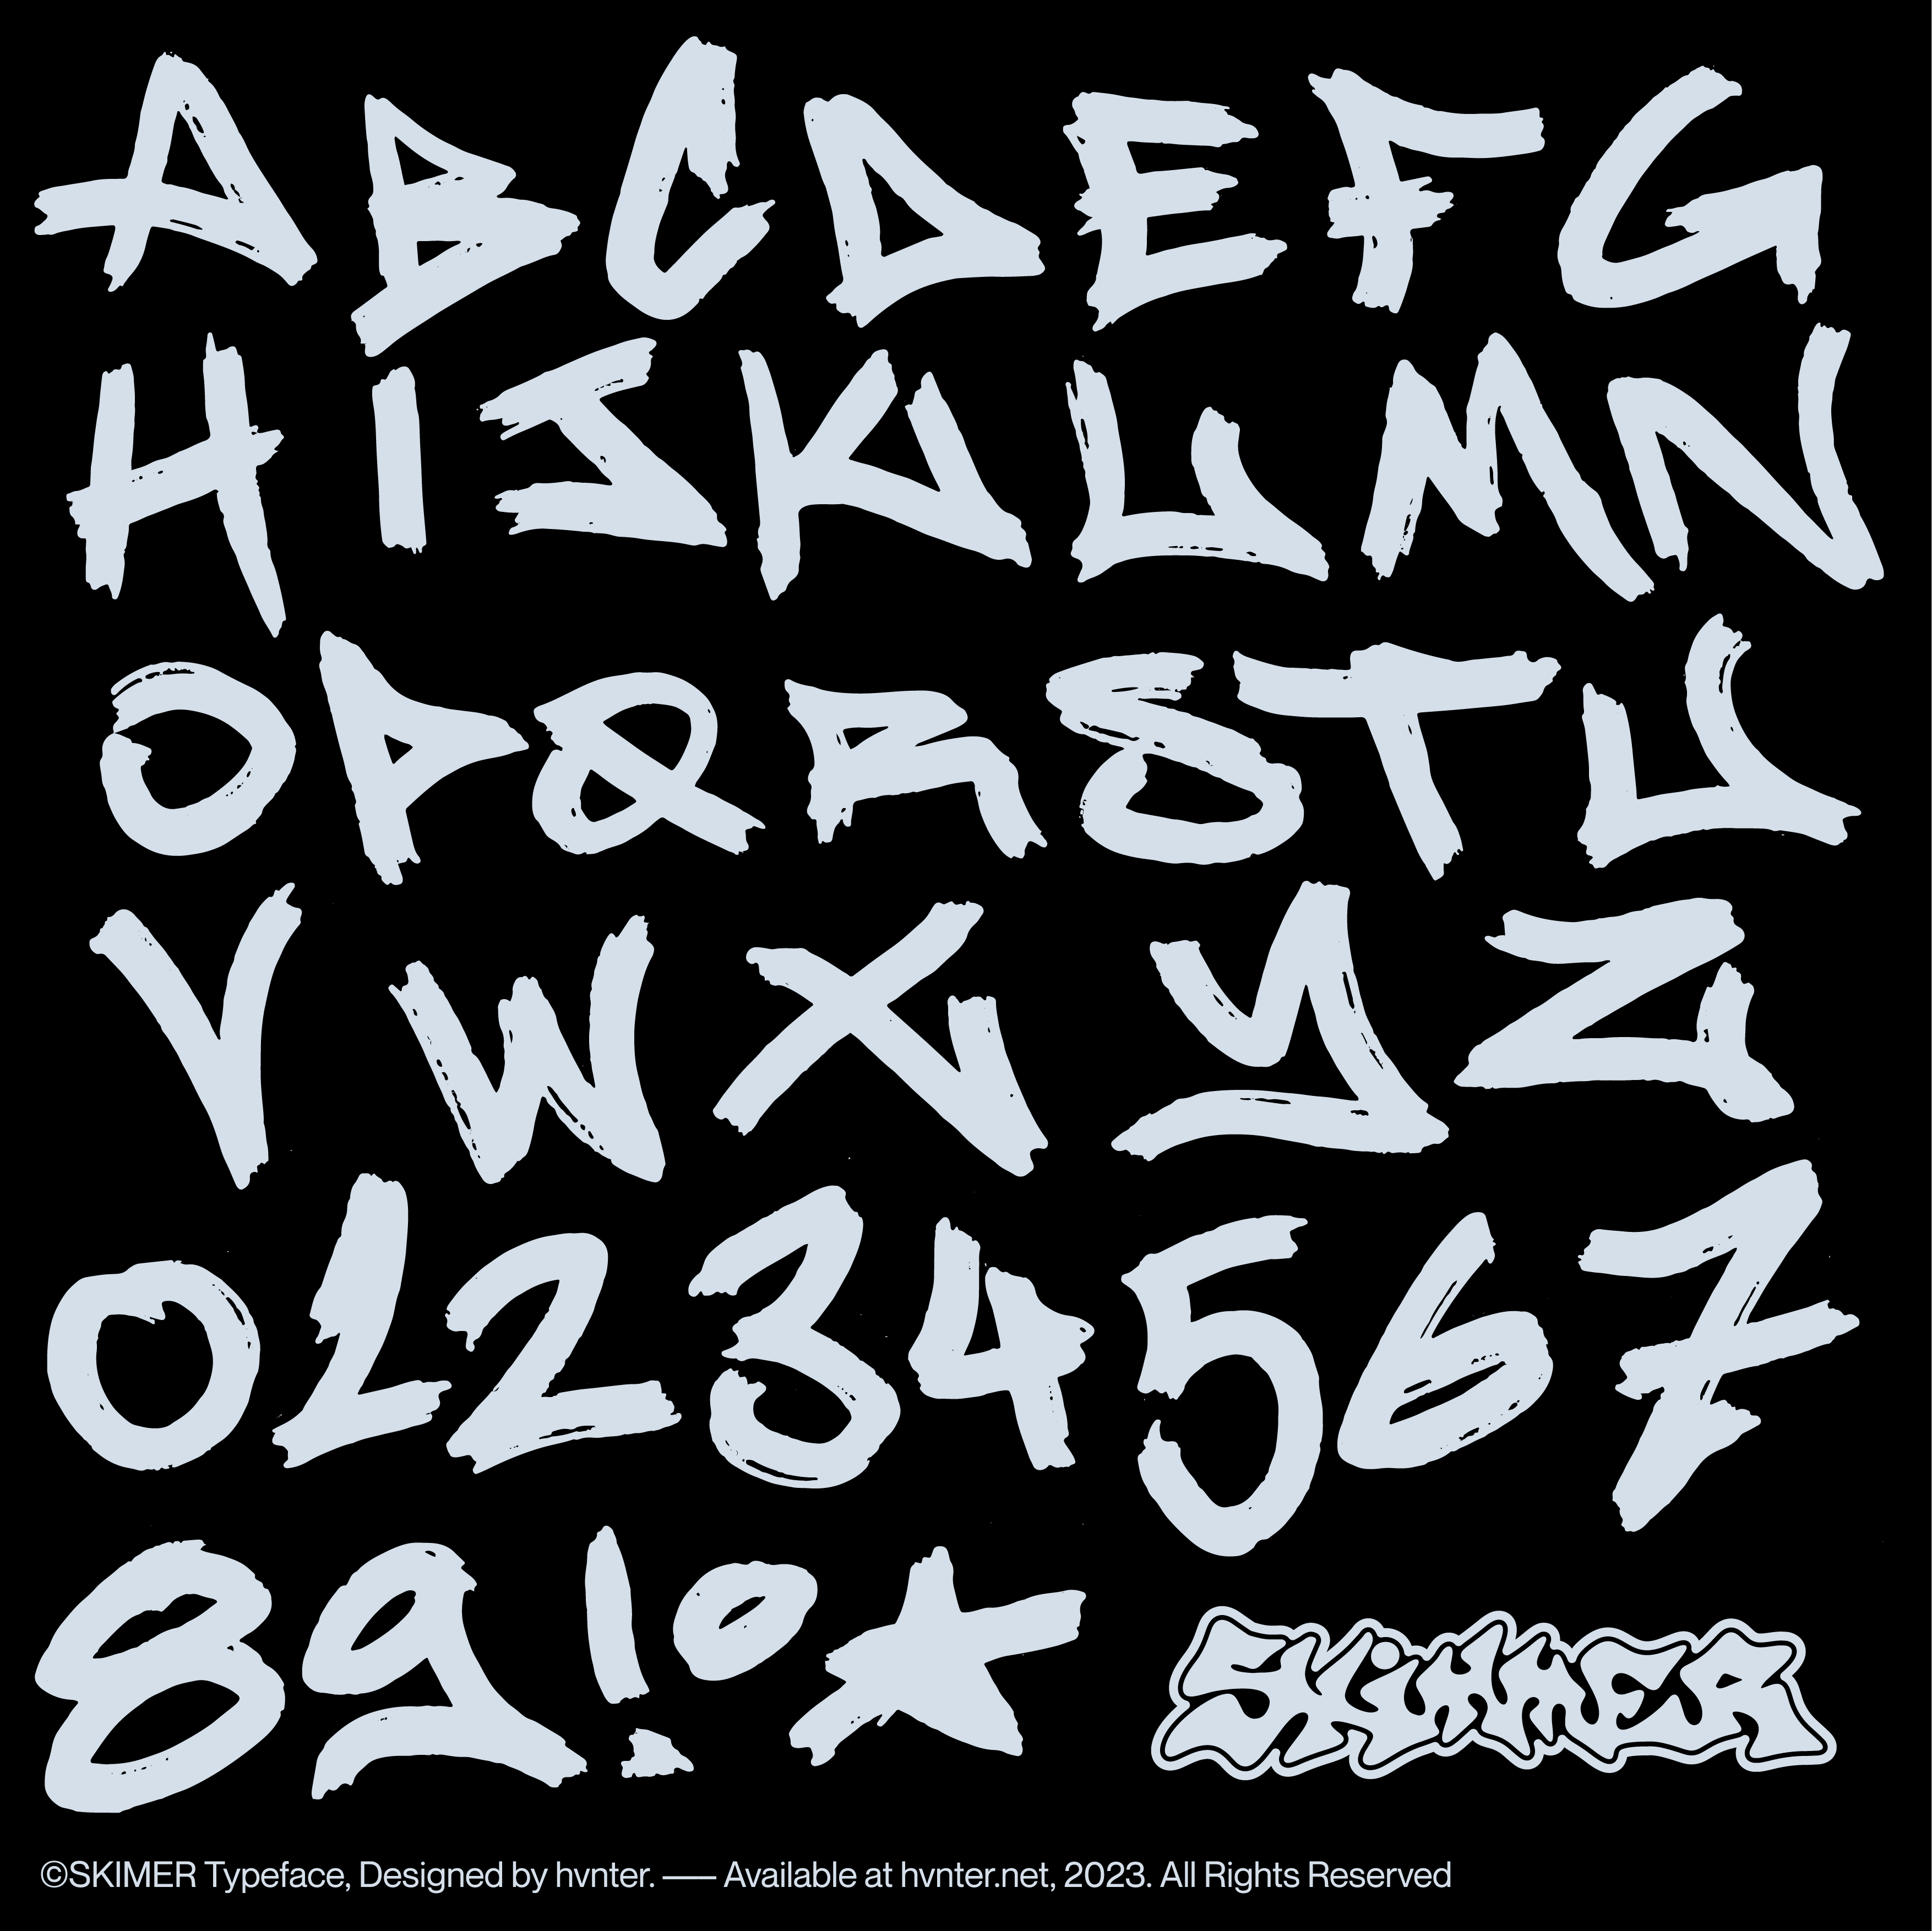 Skimmer Typeface